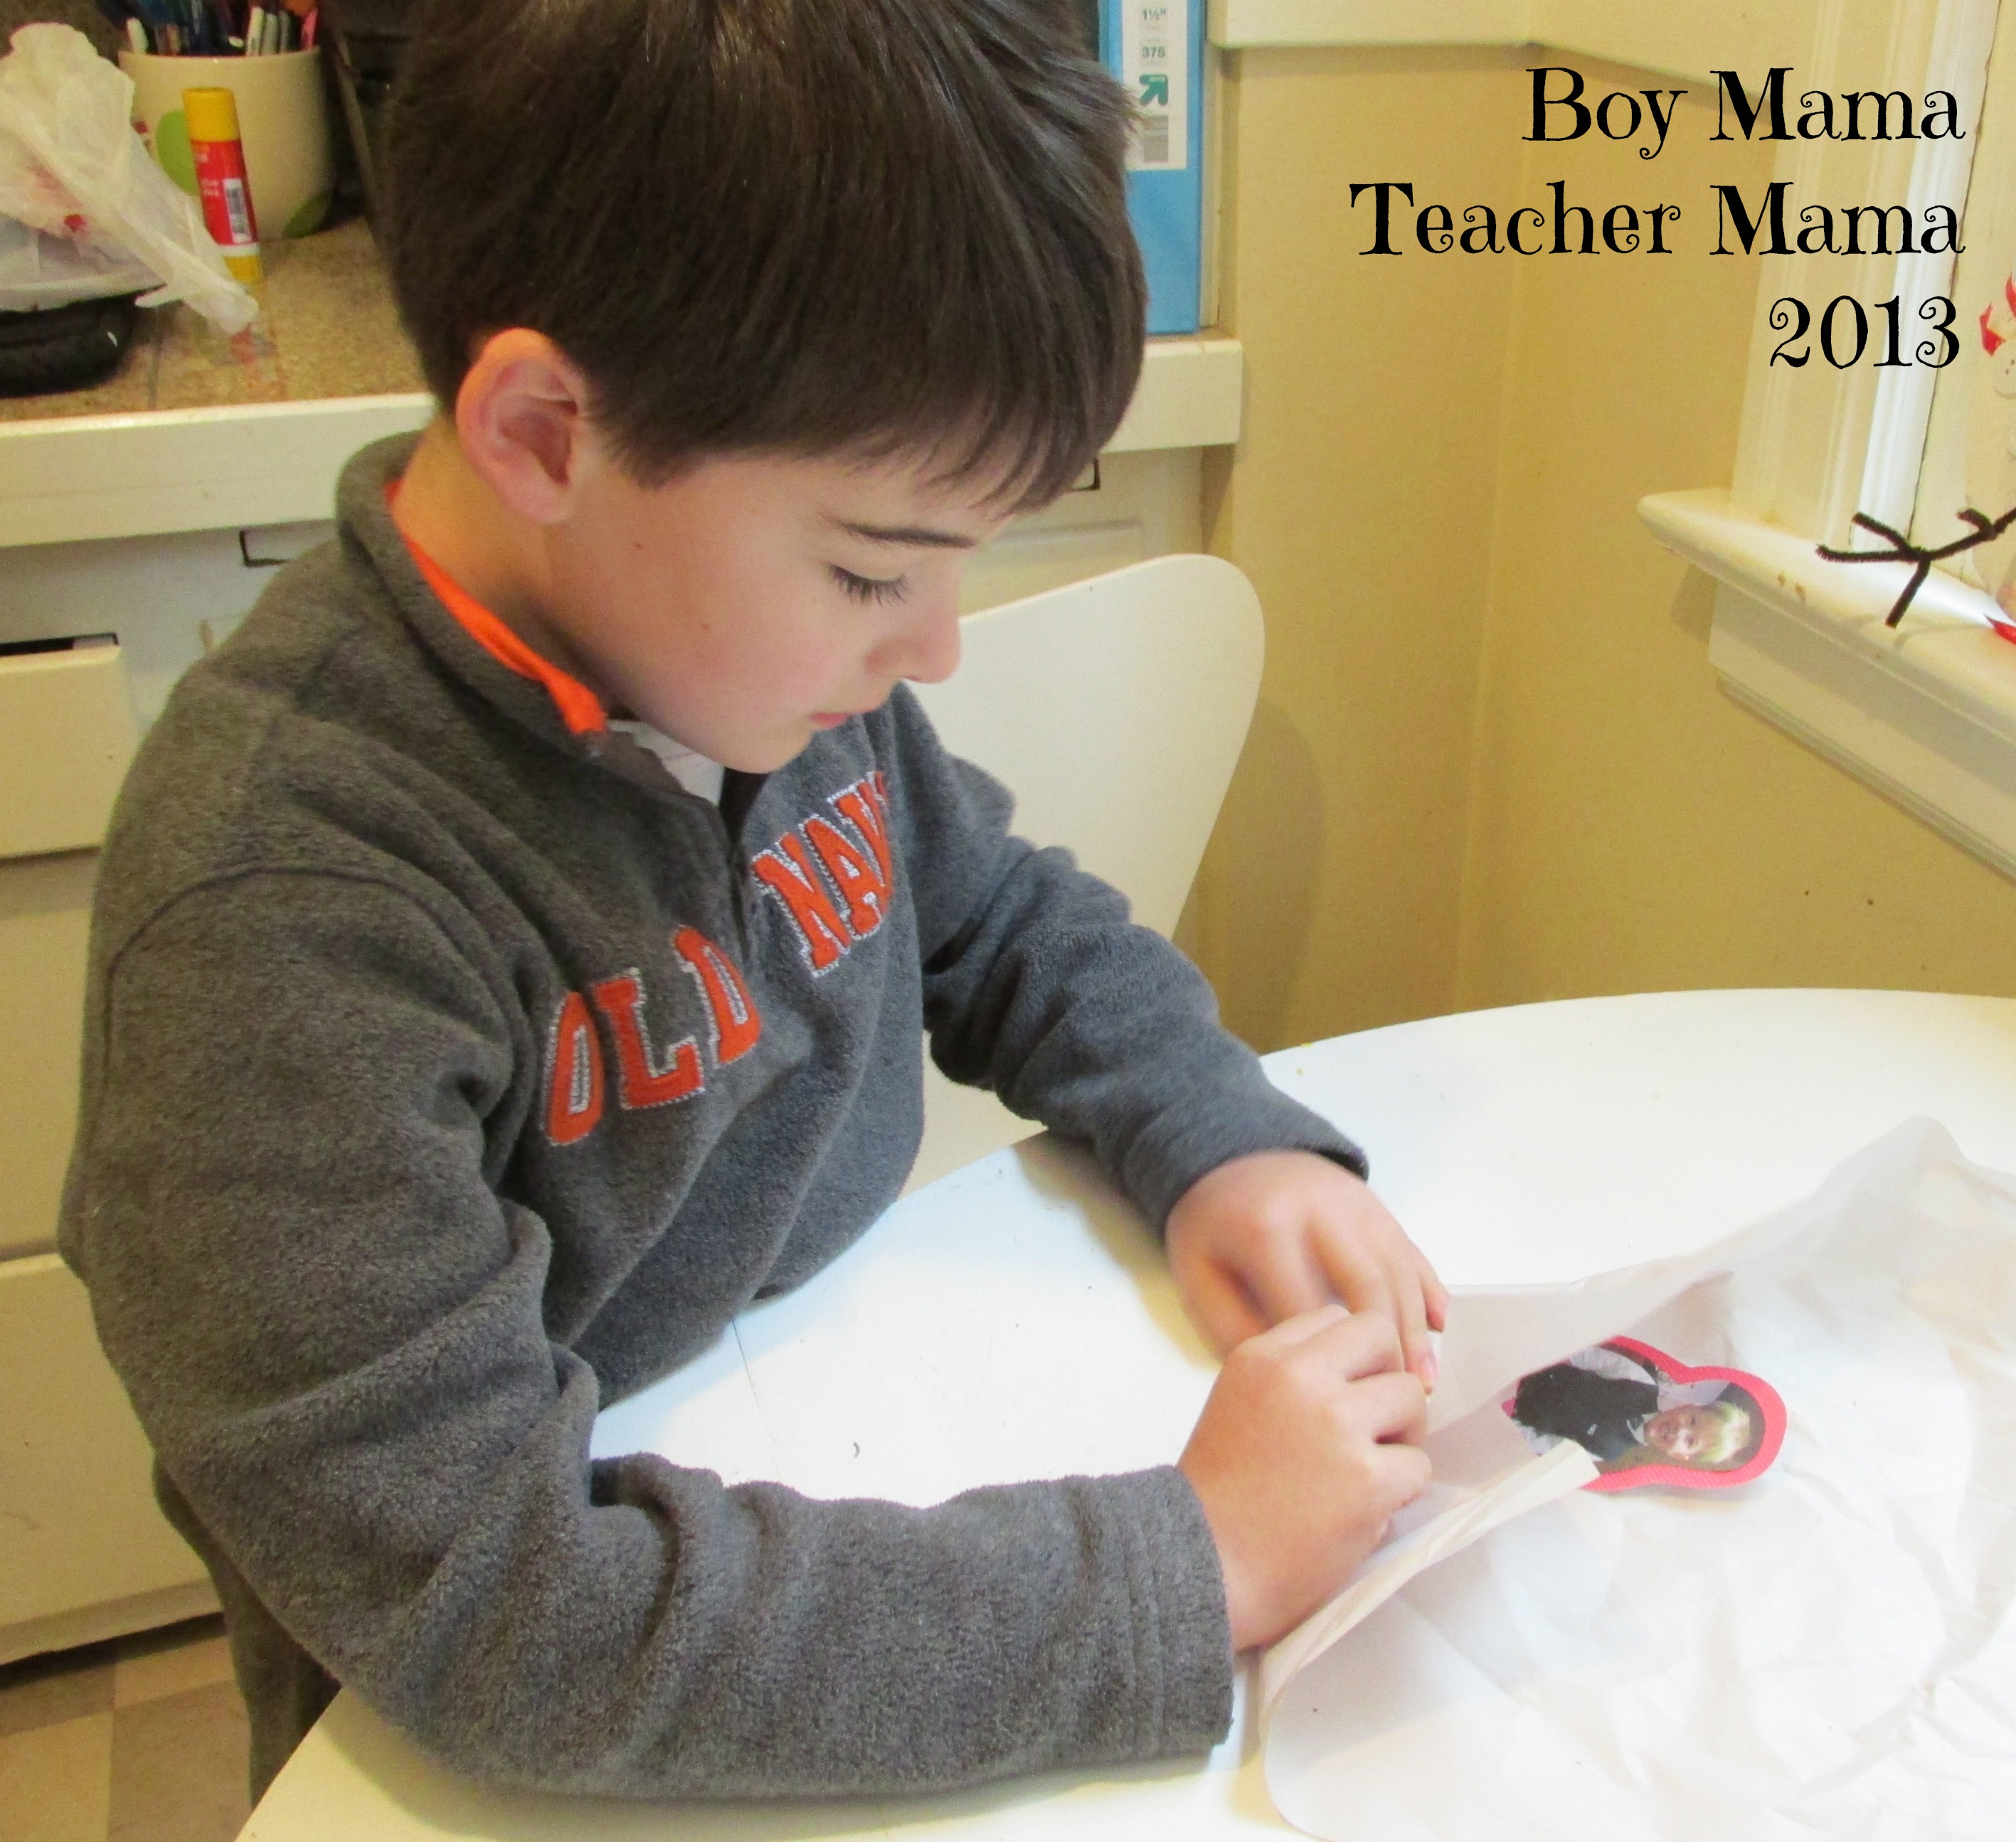 Boy Mama: Heart Sponge Painting (without the Mess) - Boy Mama Teacher Mama